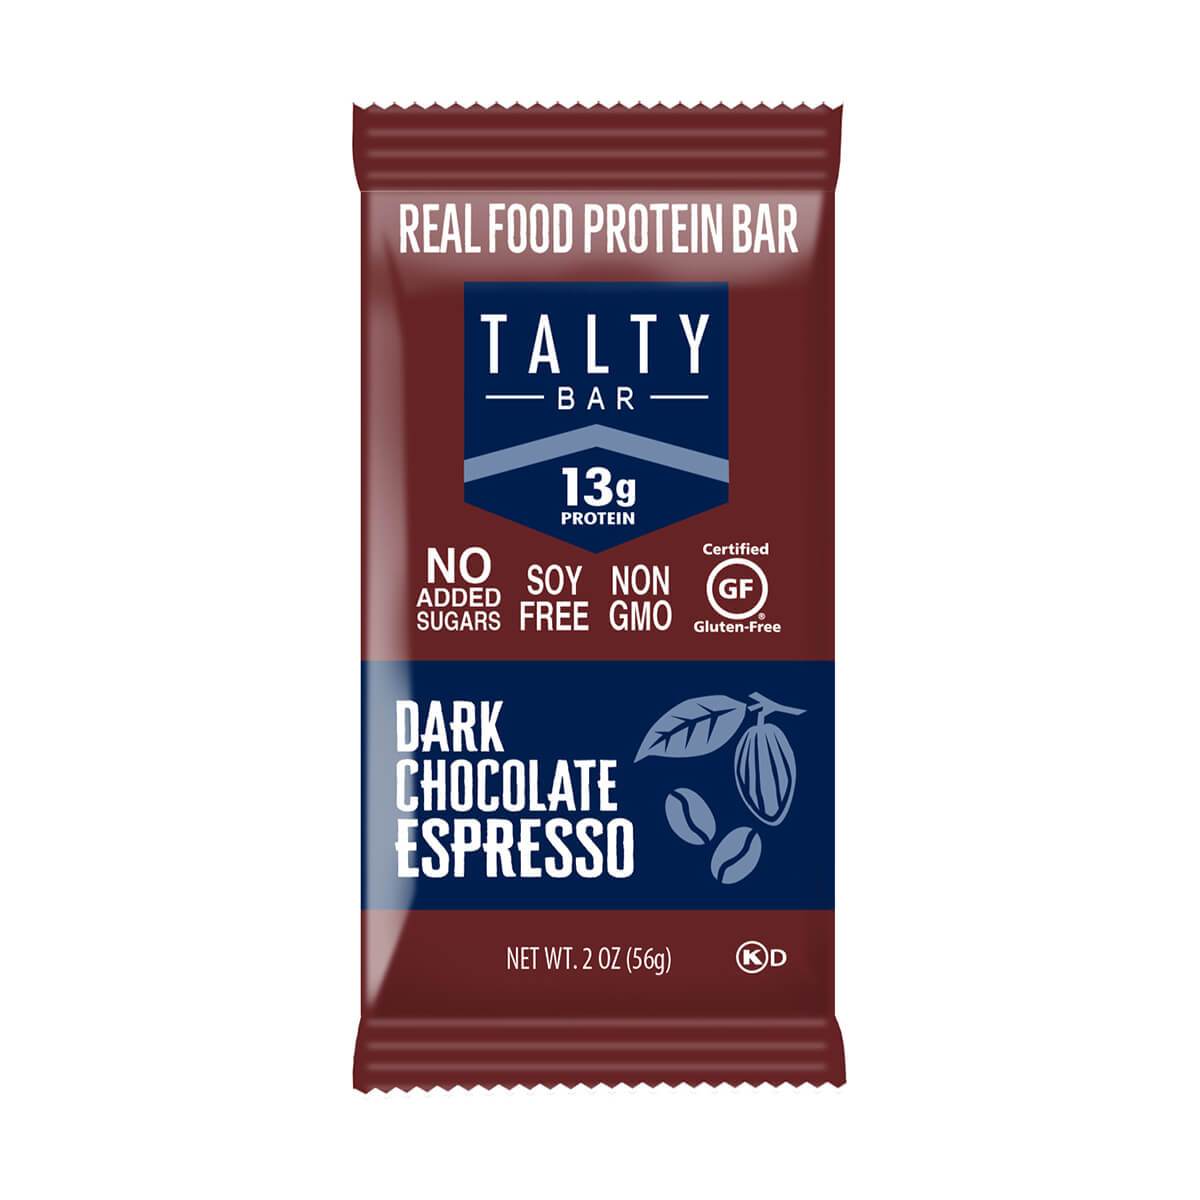 Dark Chocolate Espresso Box (6 Pack)